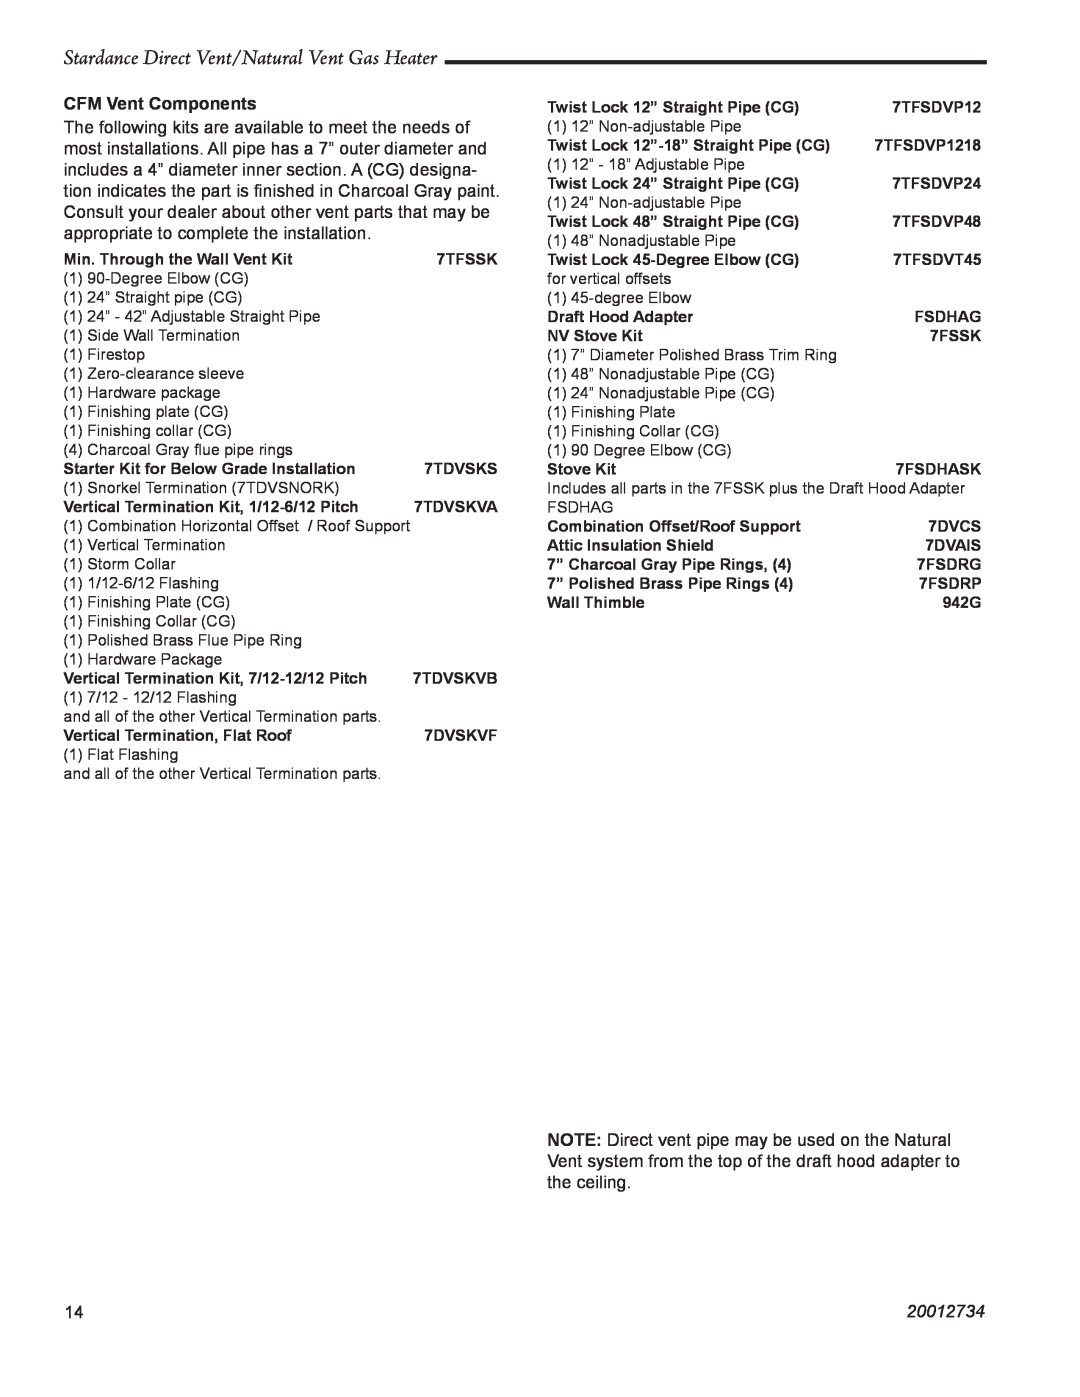 Vermont Casting SDDVT manual Stardance Direct Vent/Natural Vent Gas Heater, CFM Vent Components, 20012734 